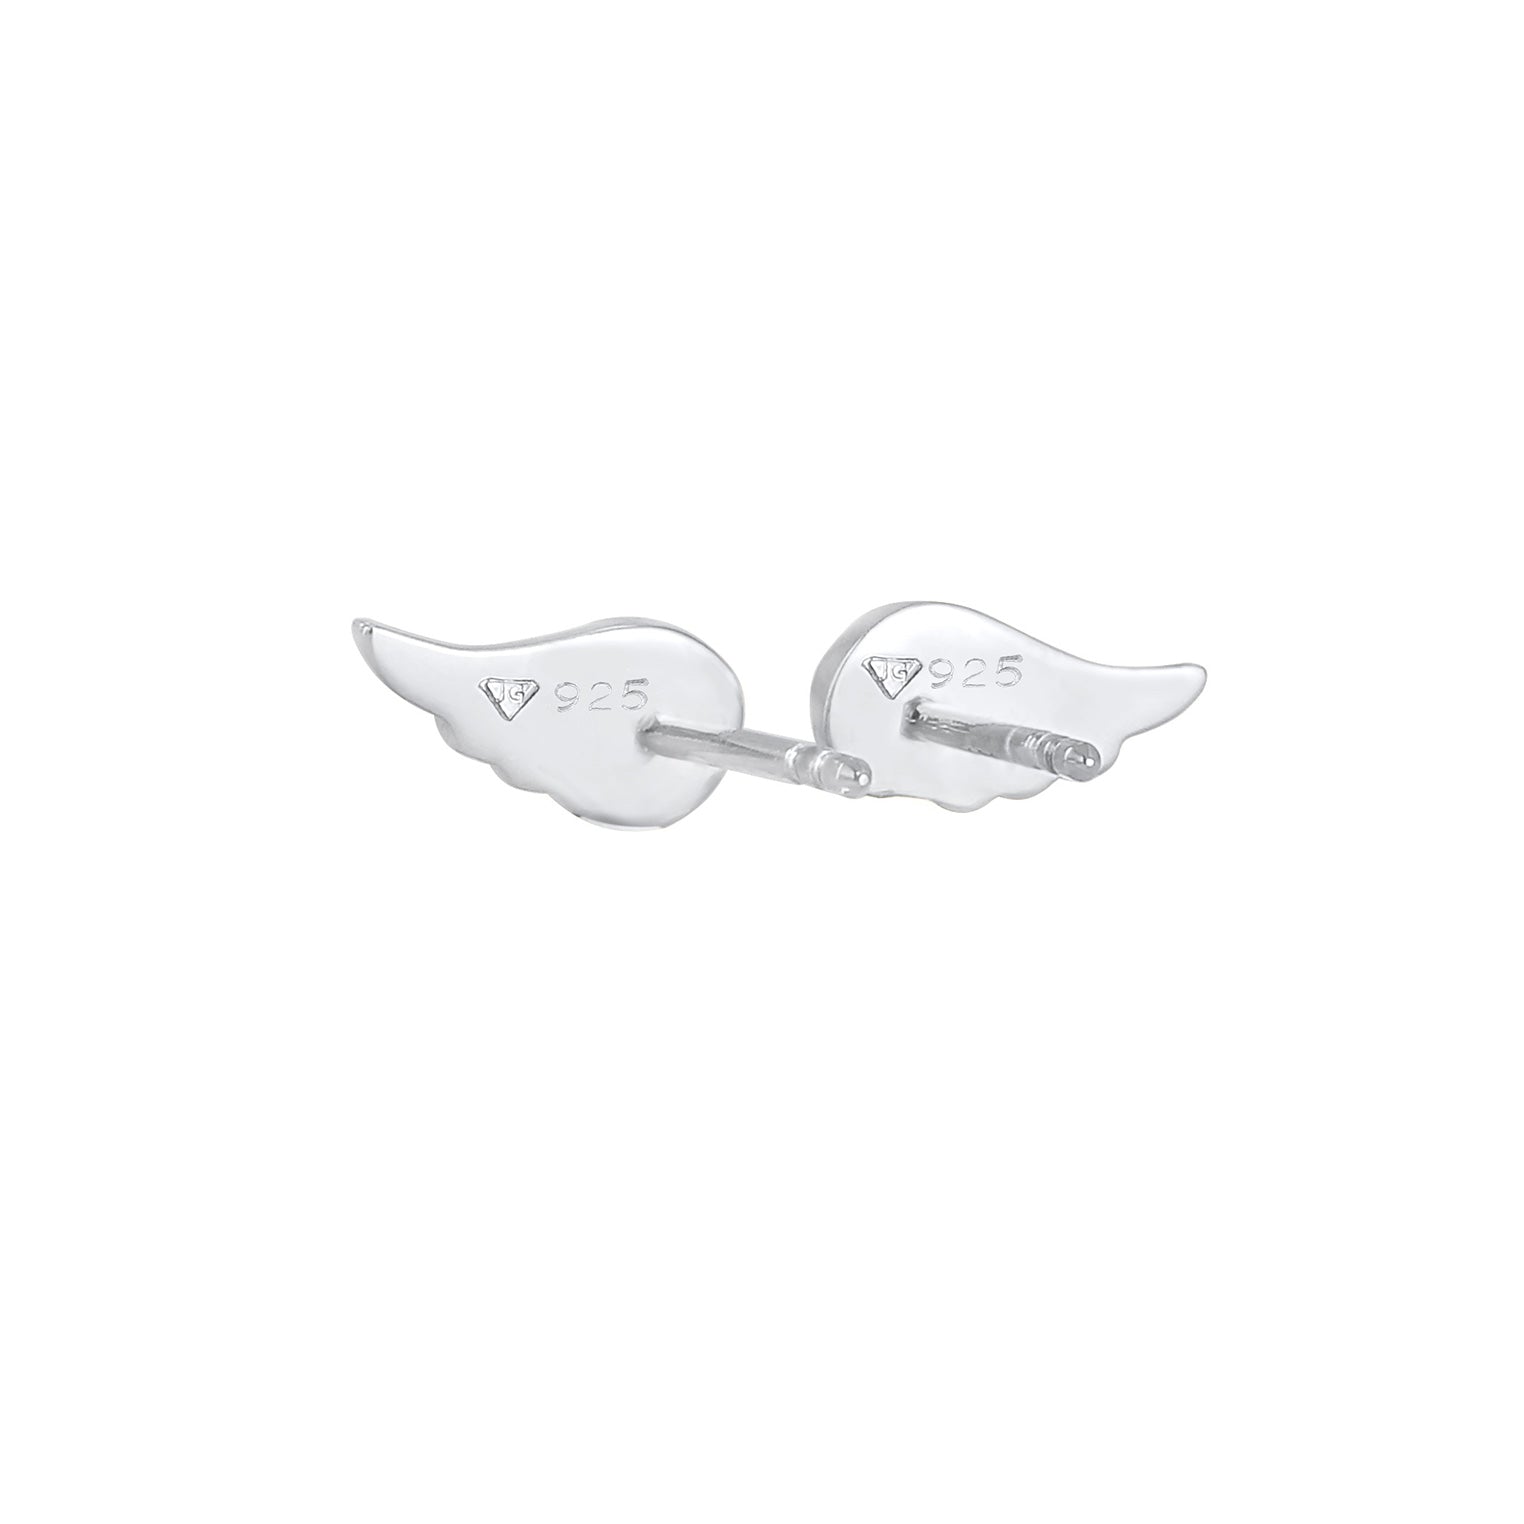 Silber - Elli | Ohrring Flügel | 925er Sterling Silber